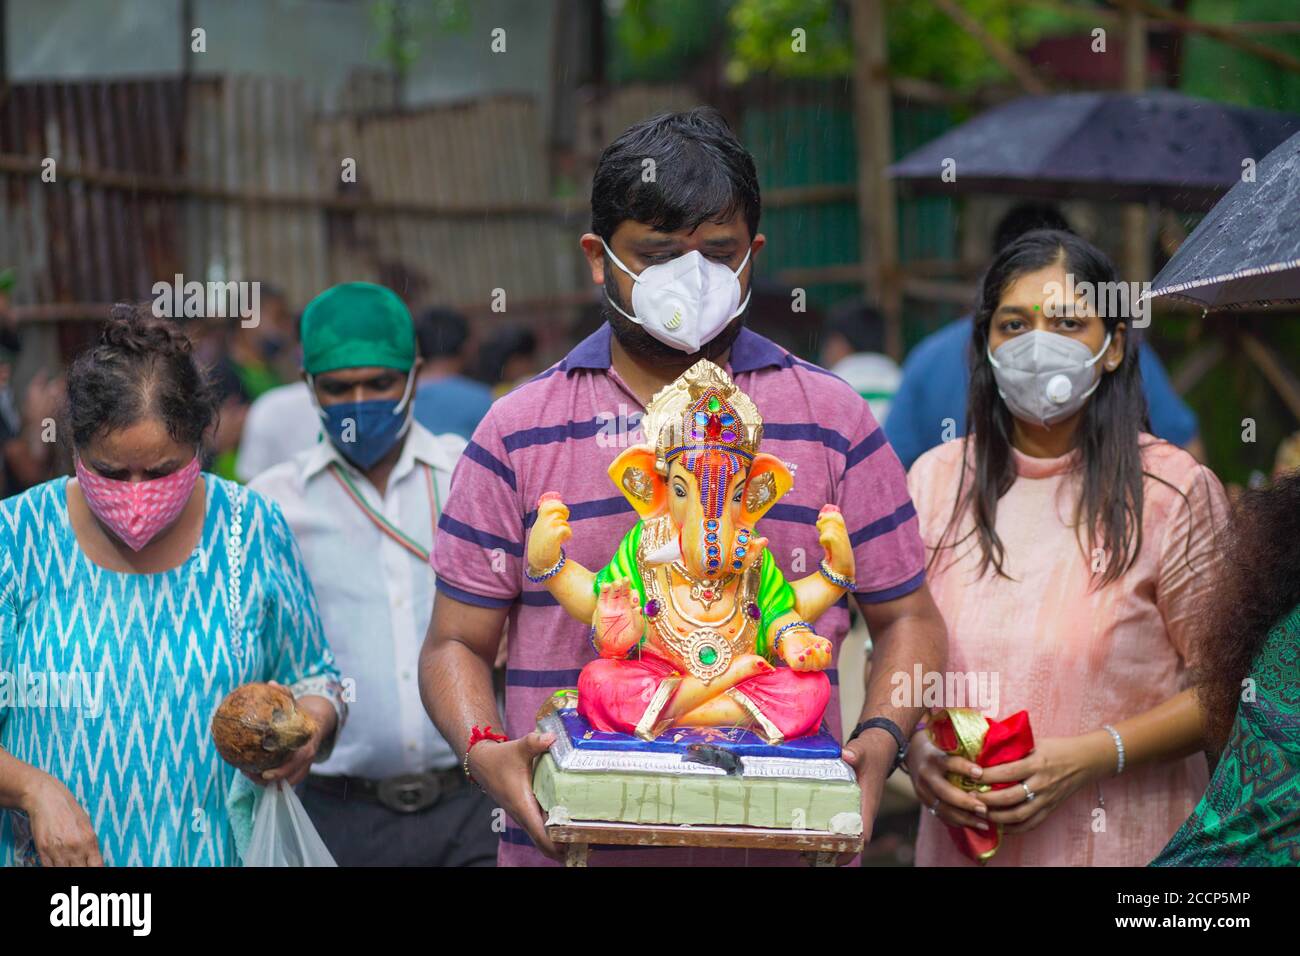 Ganesh idol immersion in covid 19 pandemic restrictions. Ganpati Visarjan In Man Made pond People With Mask -Mumbai, Maharashtra / India. Stock Photo